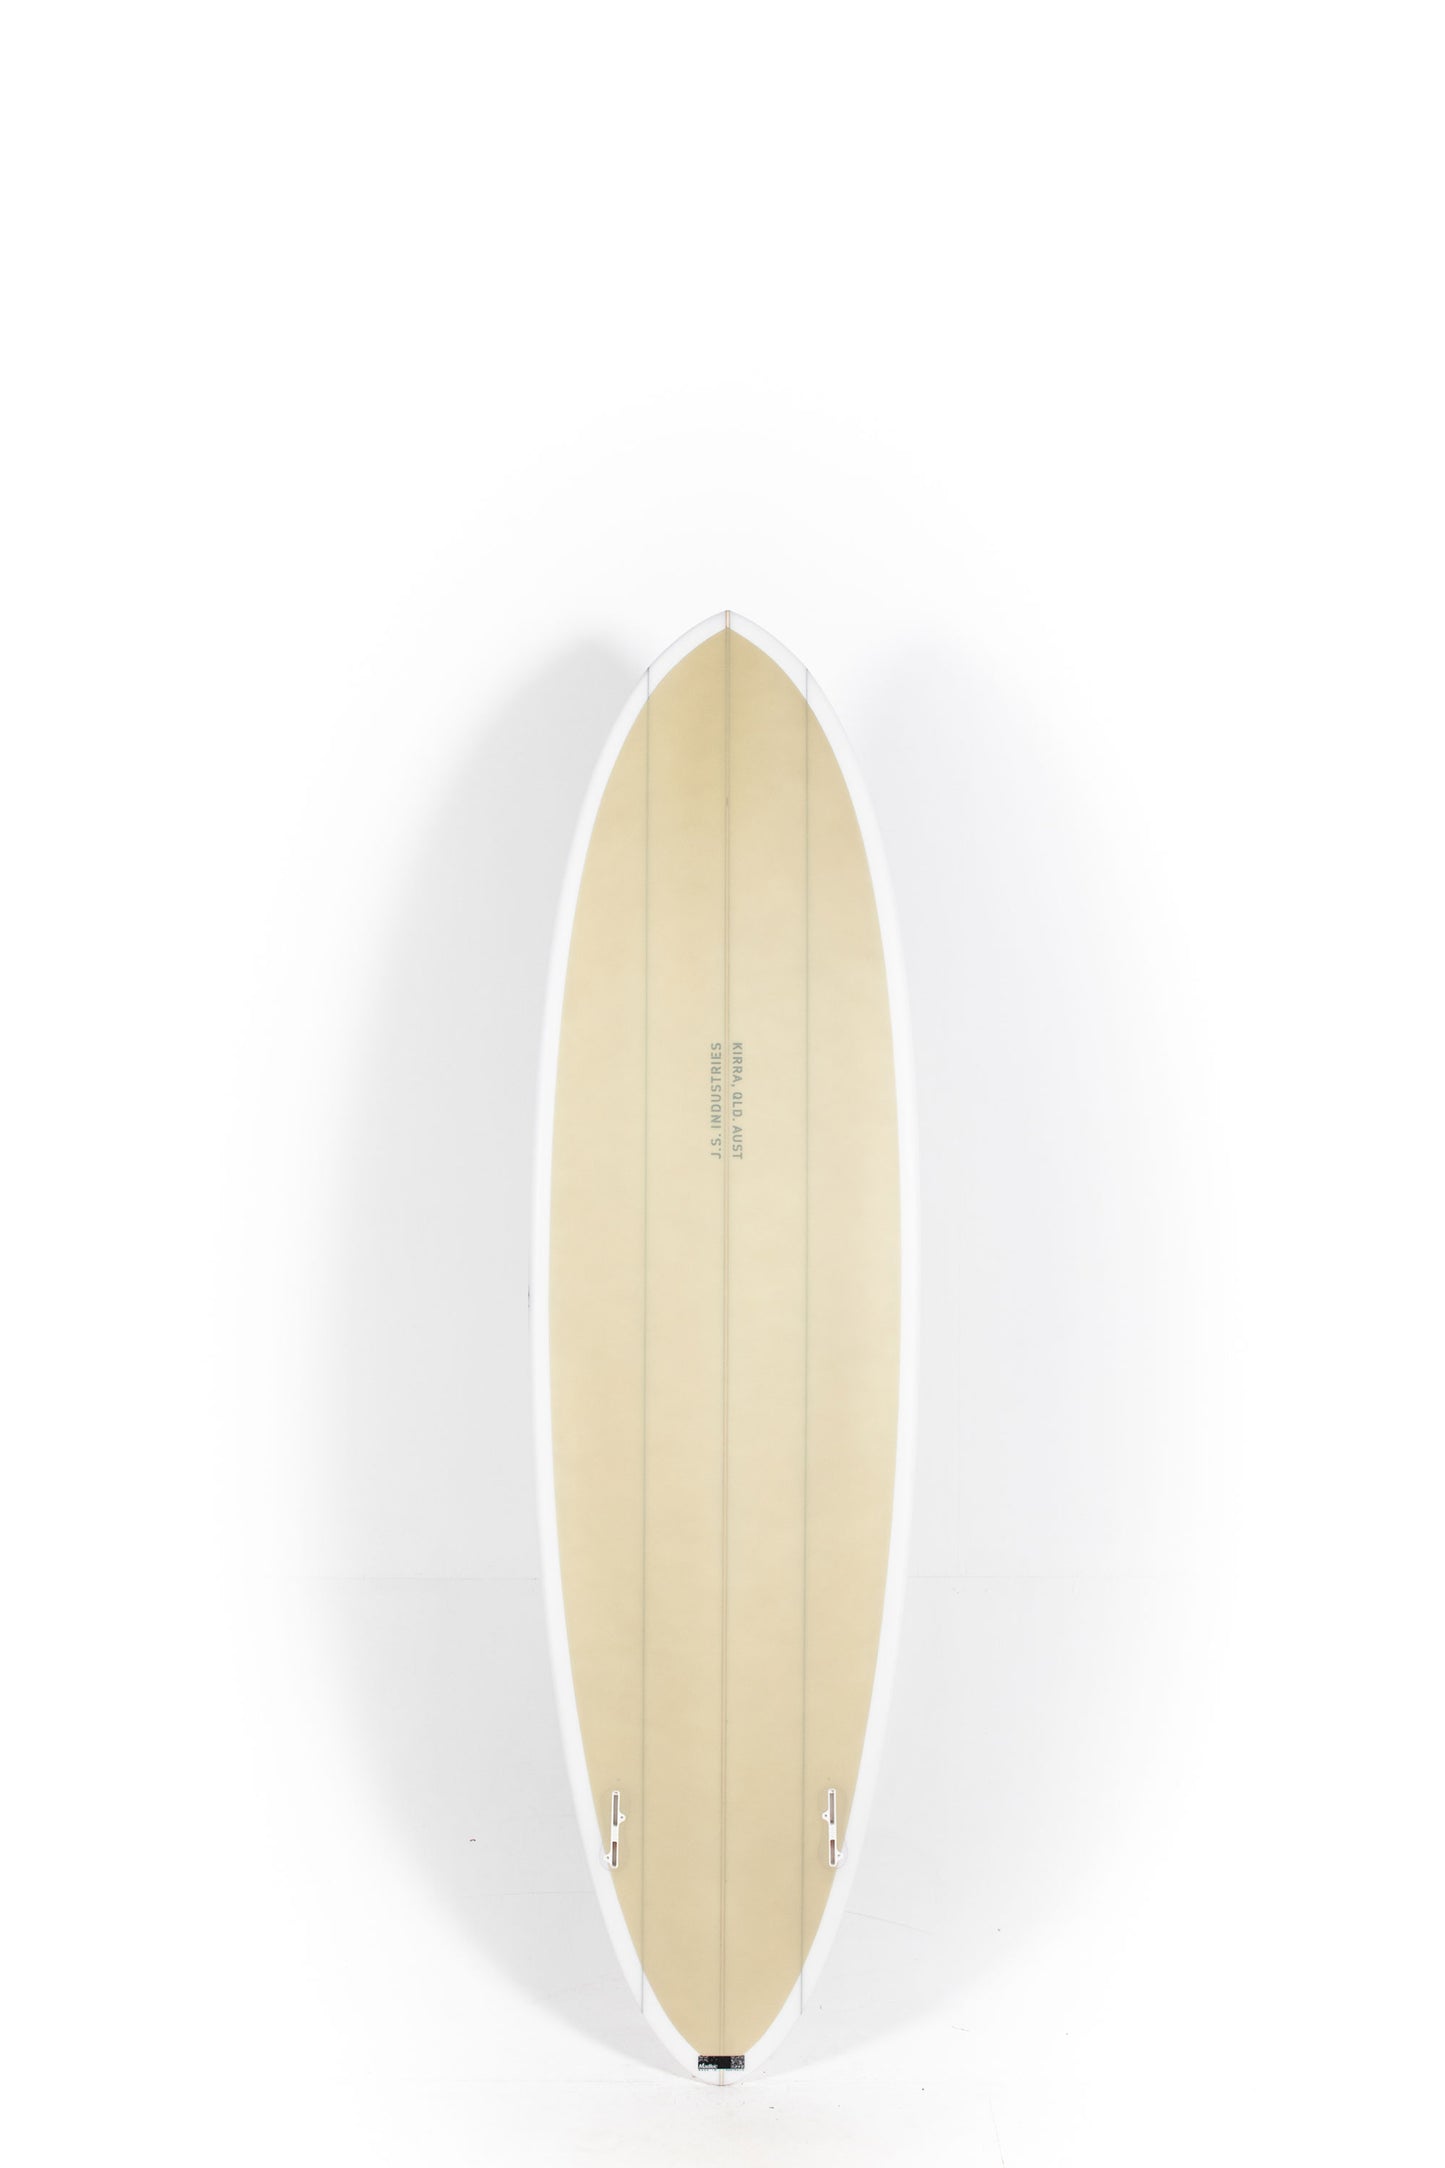 Pukas Surf Shop - JS Surfboards - BIG BARON - 6'4" x 20 x 2,56 x 34,3L. - BIGBARONTAN